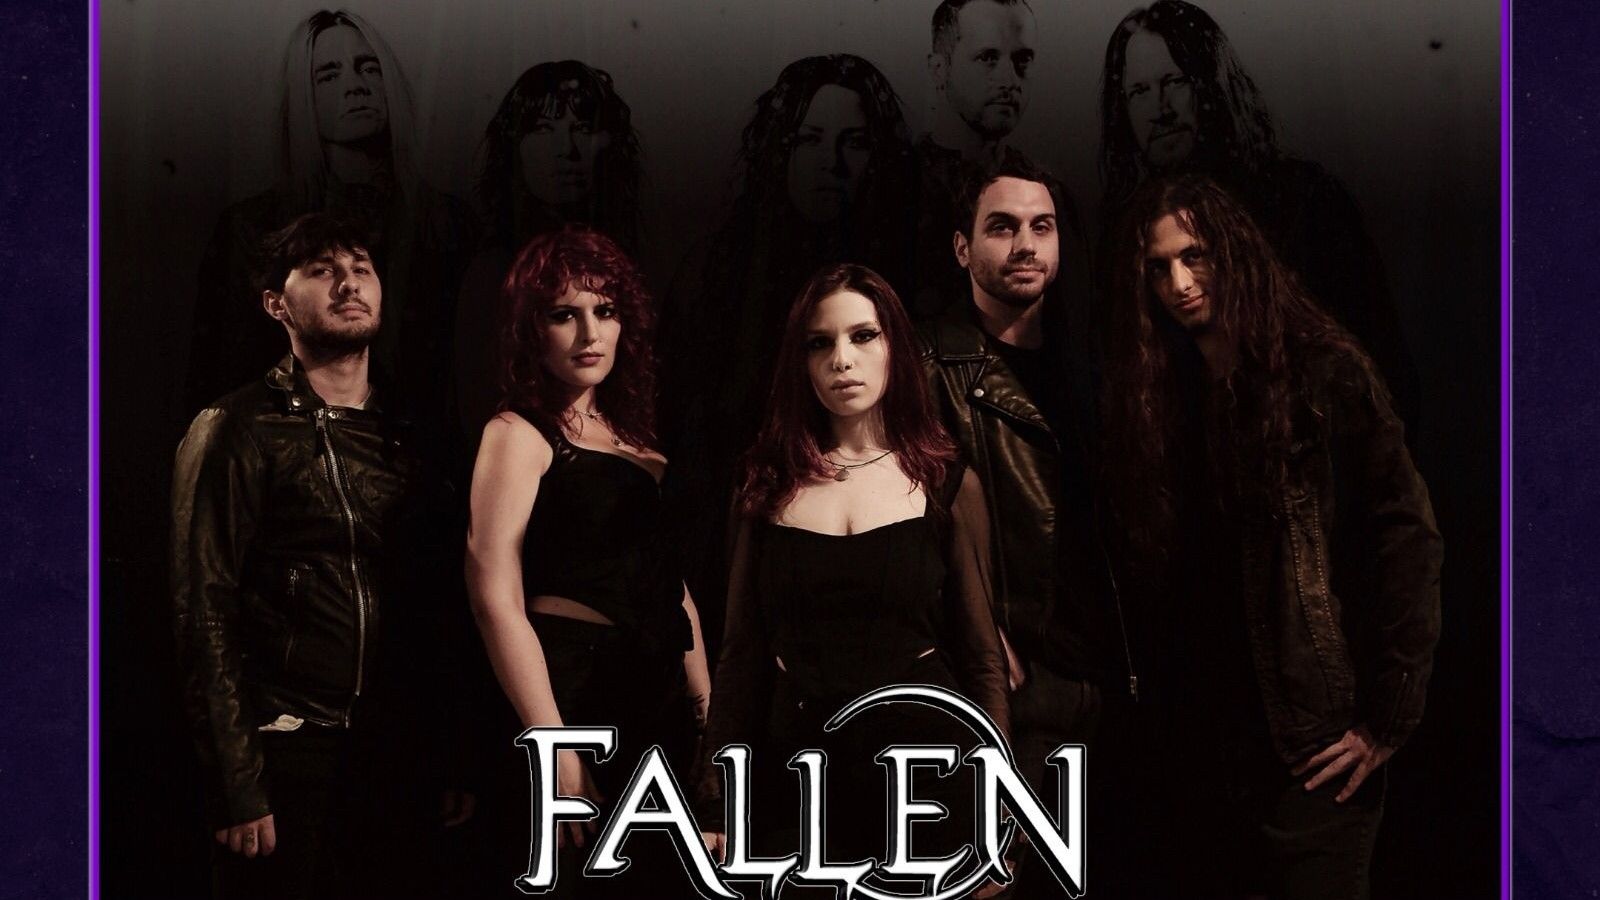 Evanescence cover band "Fallen"